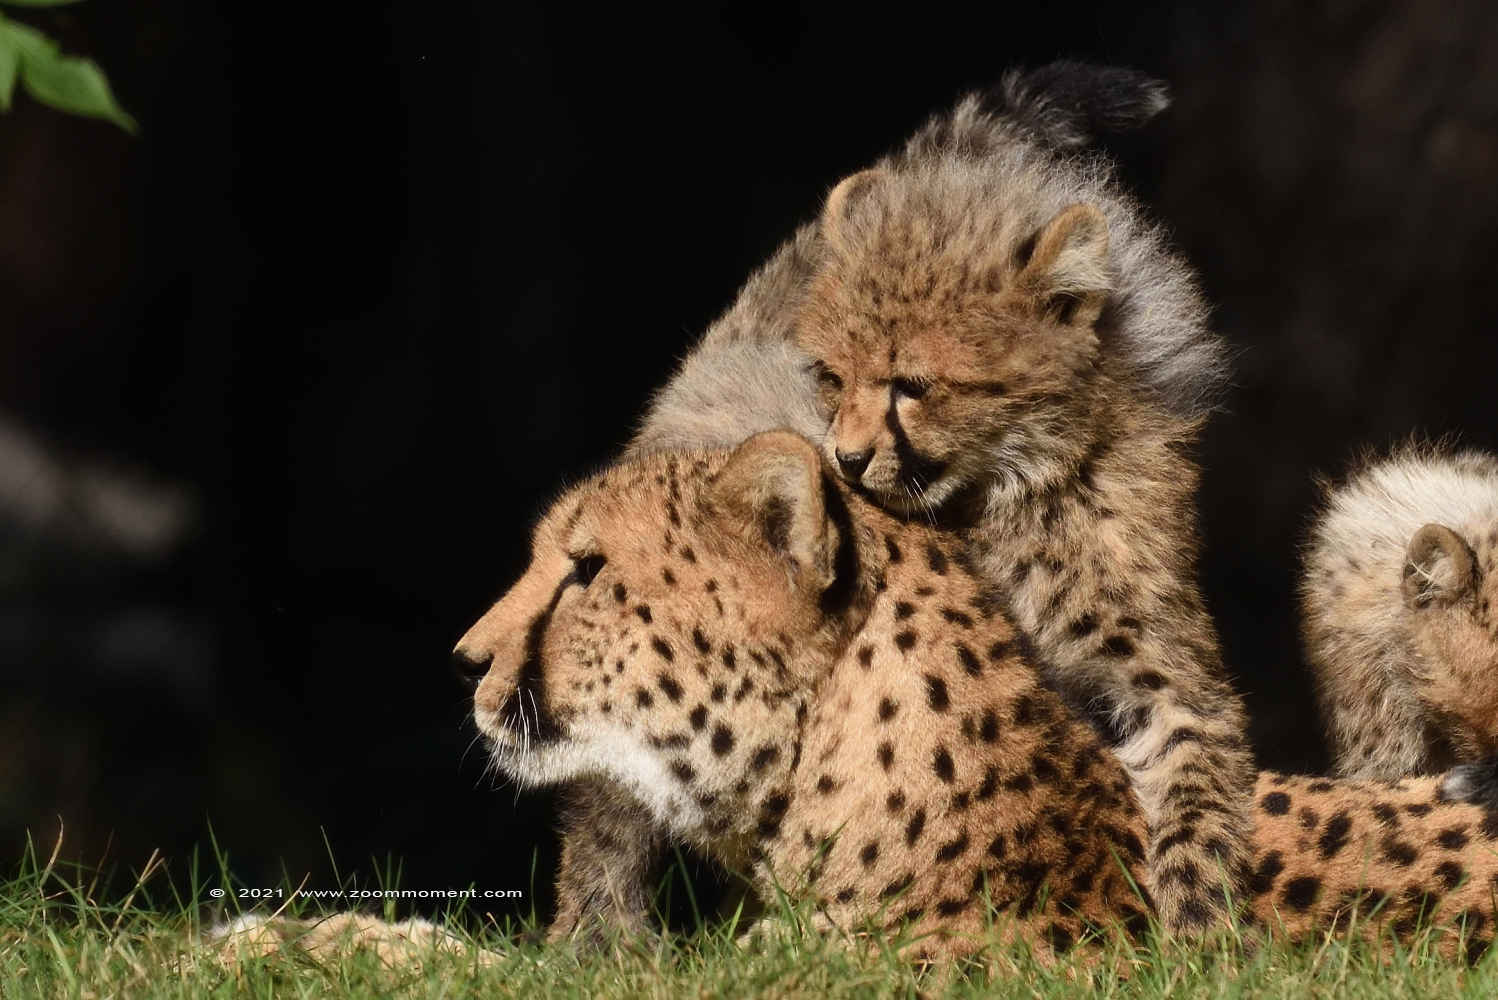 jachtluipaard ( Acinonyx jubatus ) cheetah
Welpen, geboren augustus 2021, op de foto ongeveer 5 weken oud
Cubs, born august 2021, on the picture about 5 weeks old
Trefwoorden: Safaripark Beekse Bergen jachtluipaard Acinonyx jubatus cheetah